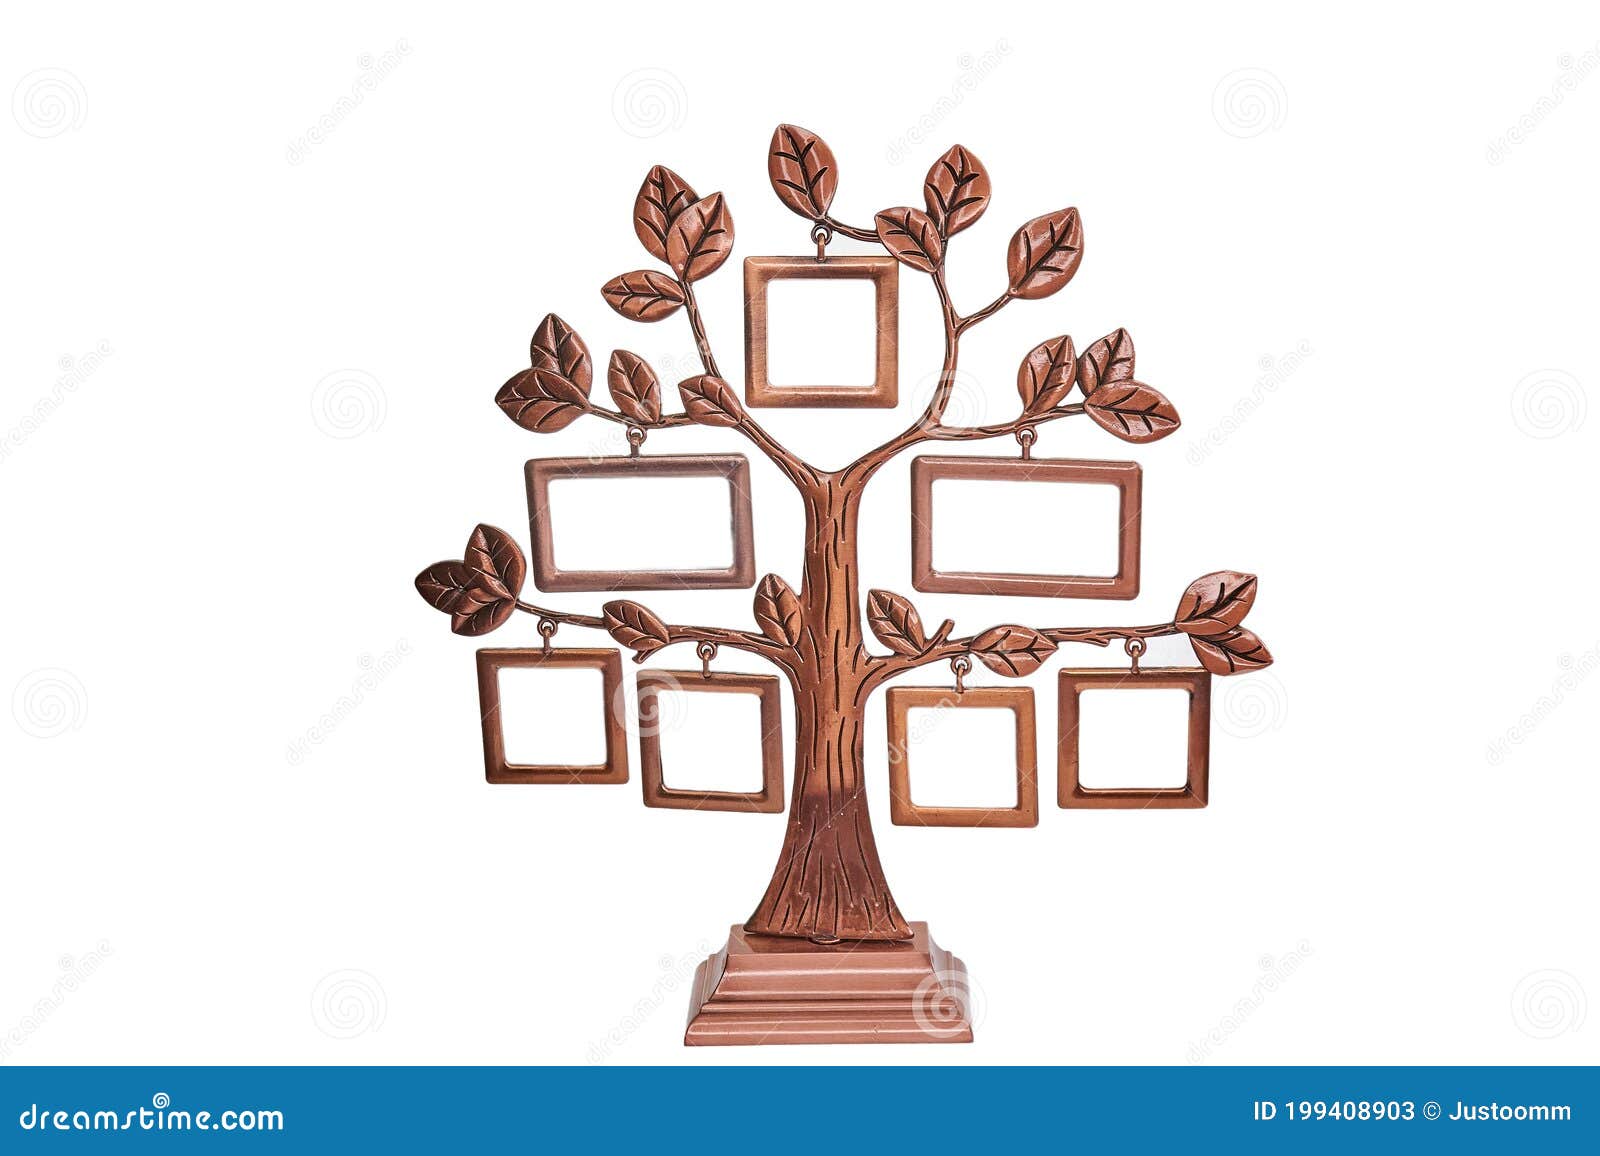 genealogy family tree frames for photos